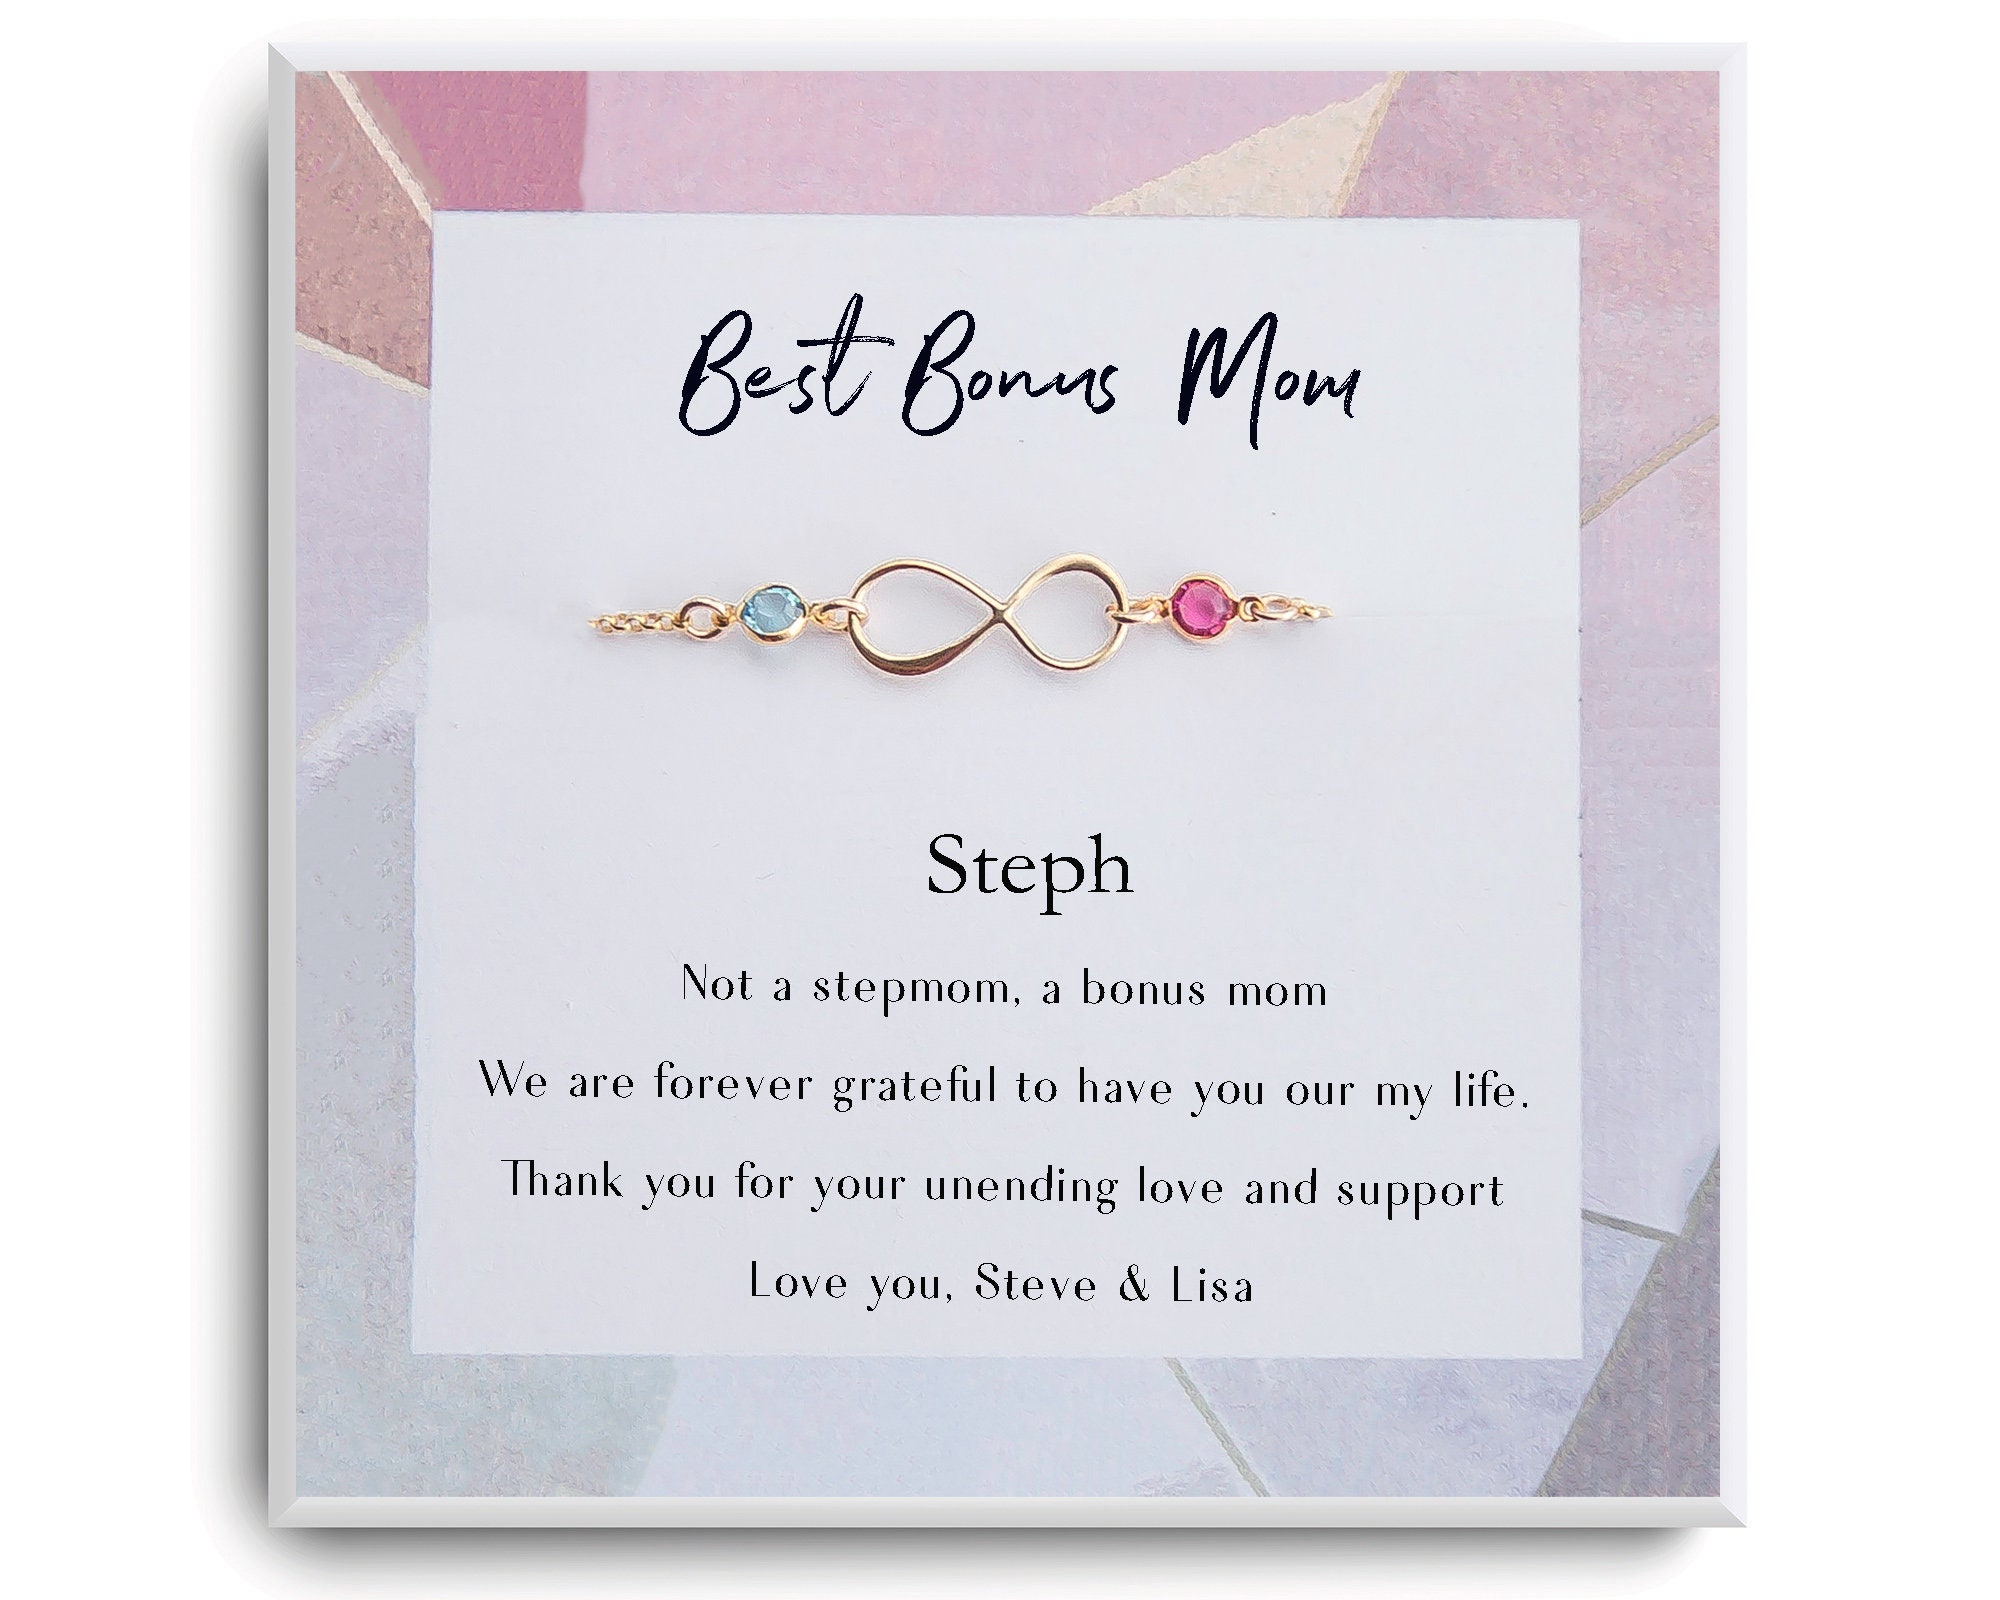  Kilener Bonus Mom Stepmom Gifts Bracelet from Daughter